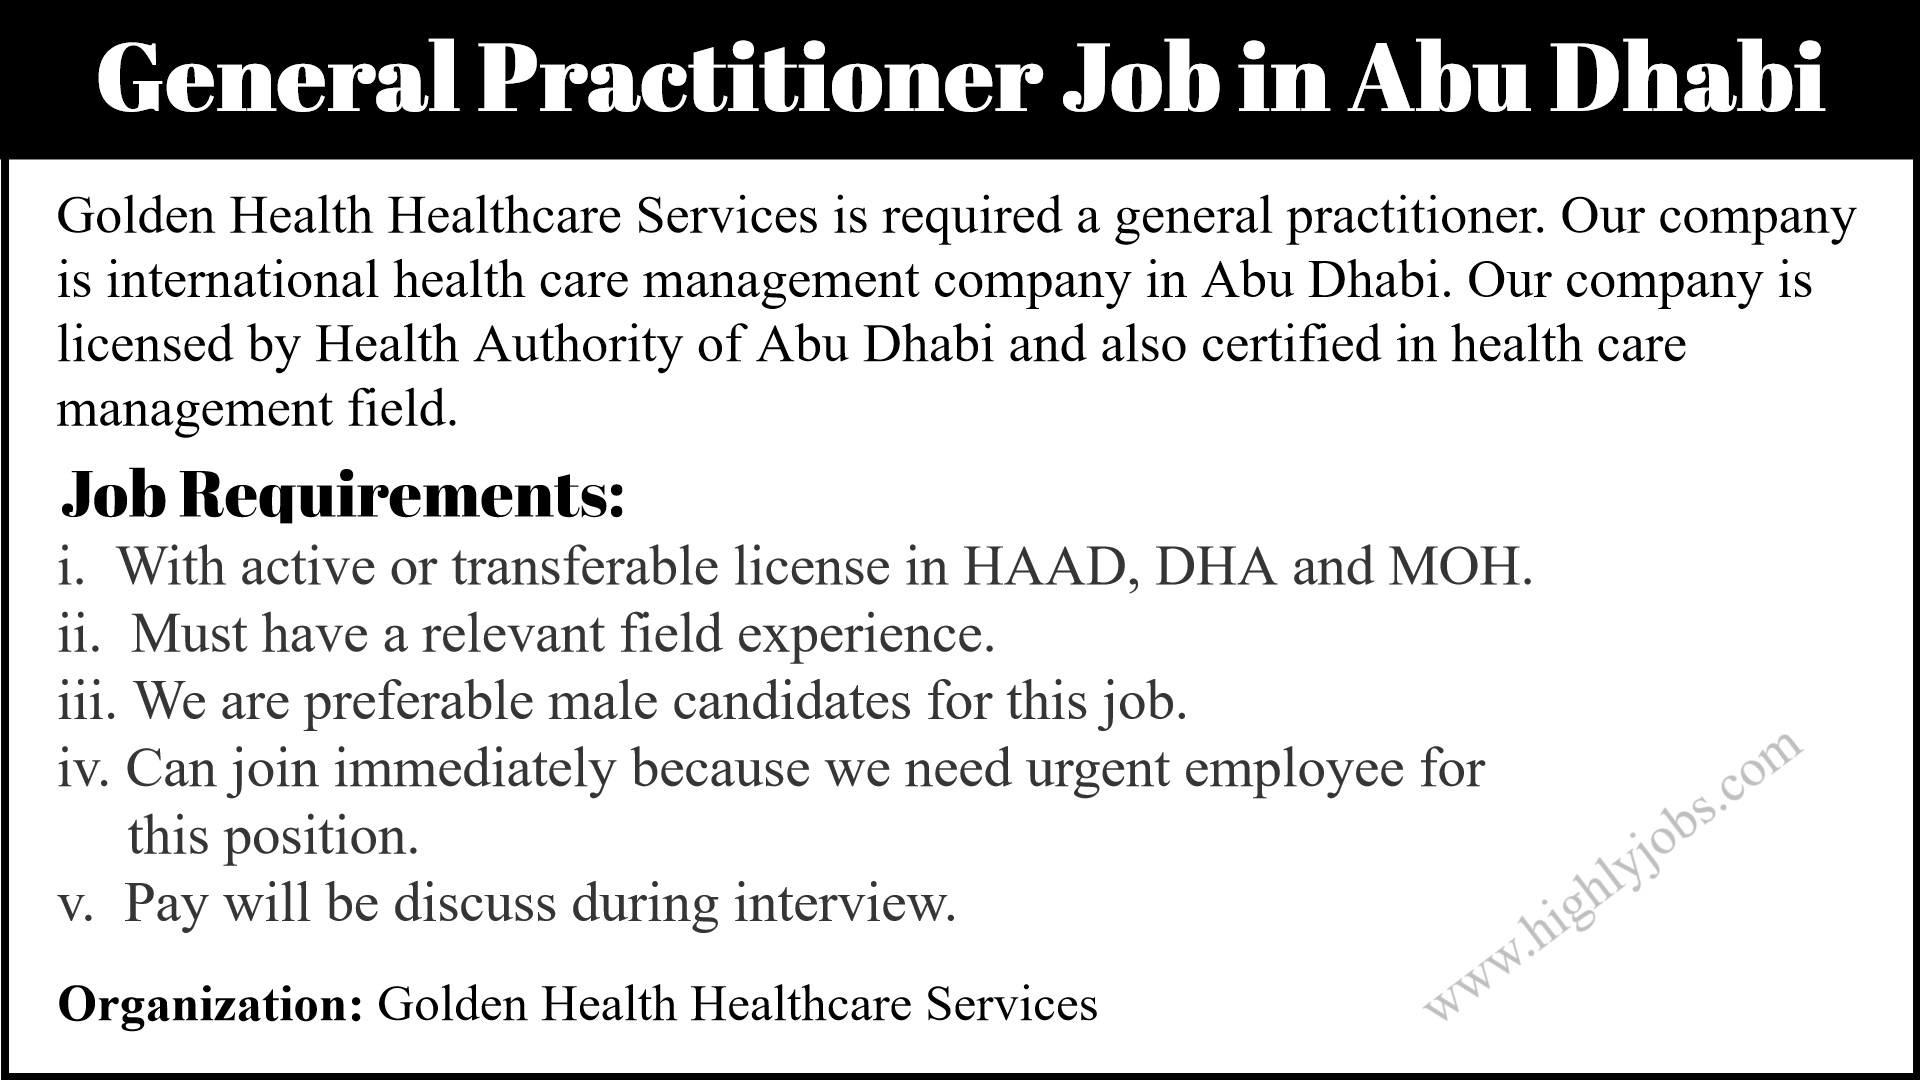 General Practitioner Job in Abu Dhabi